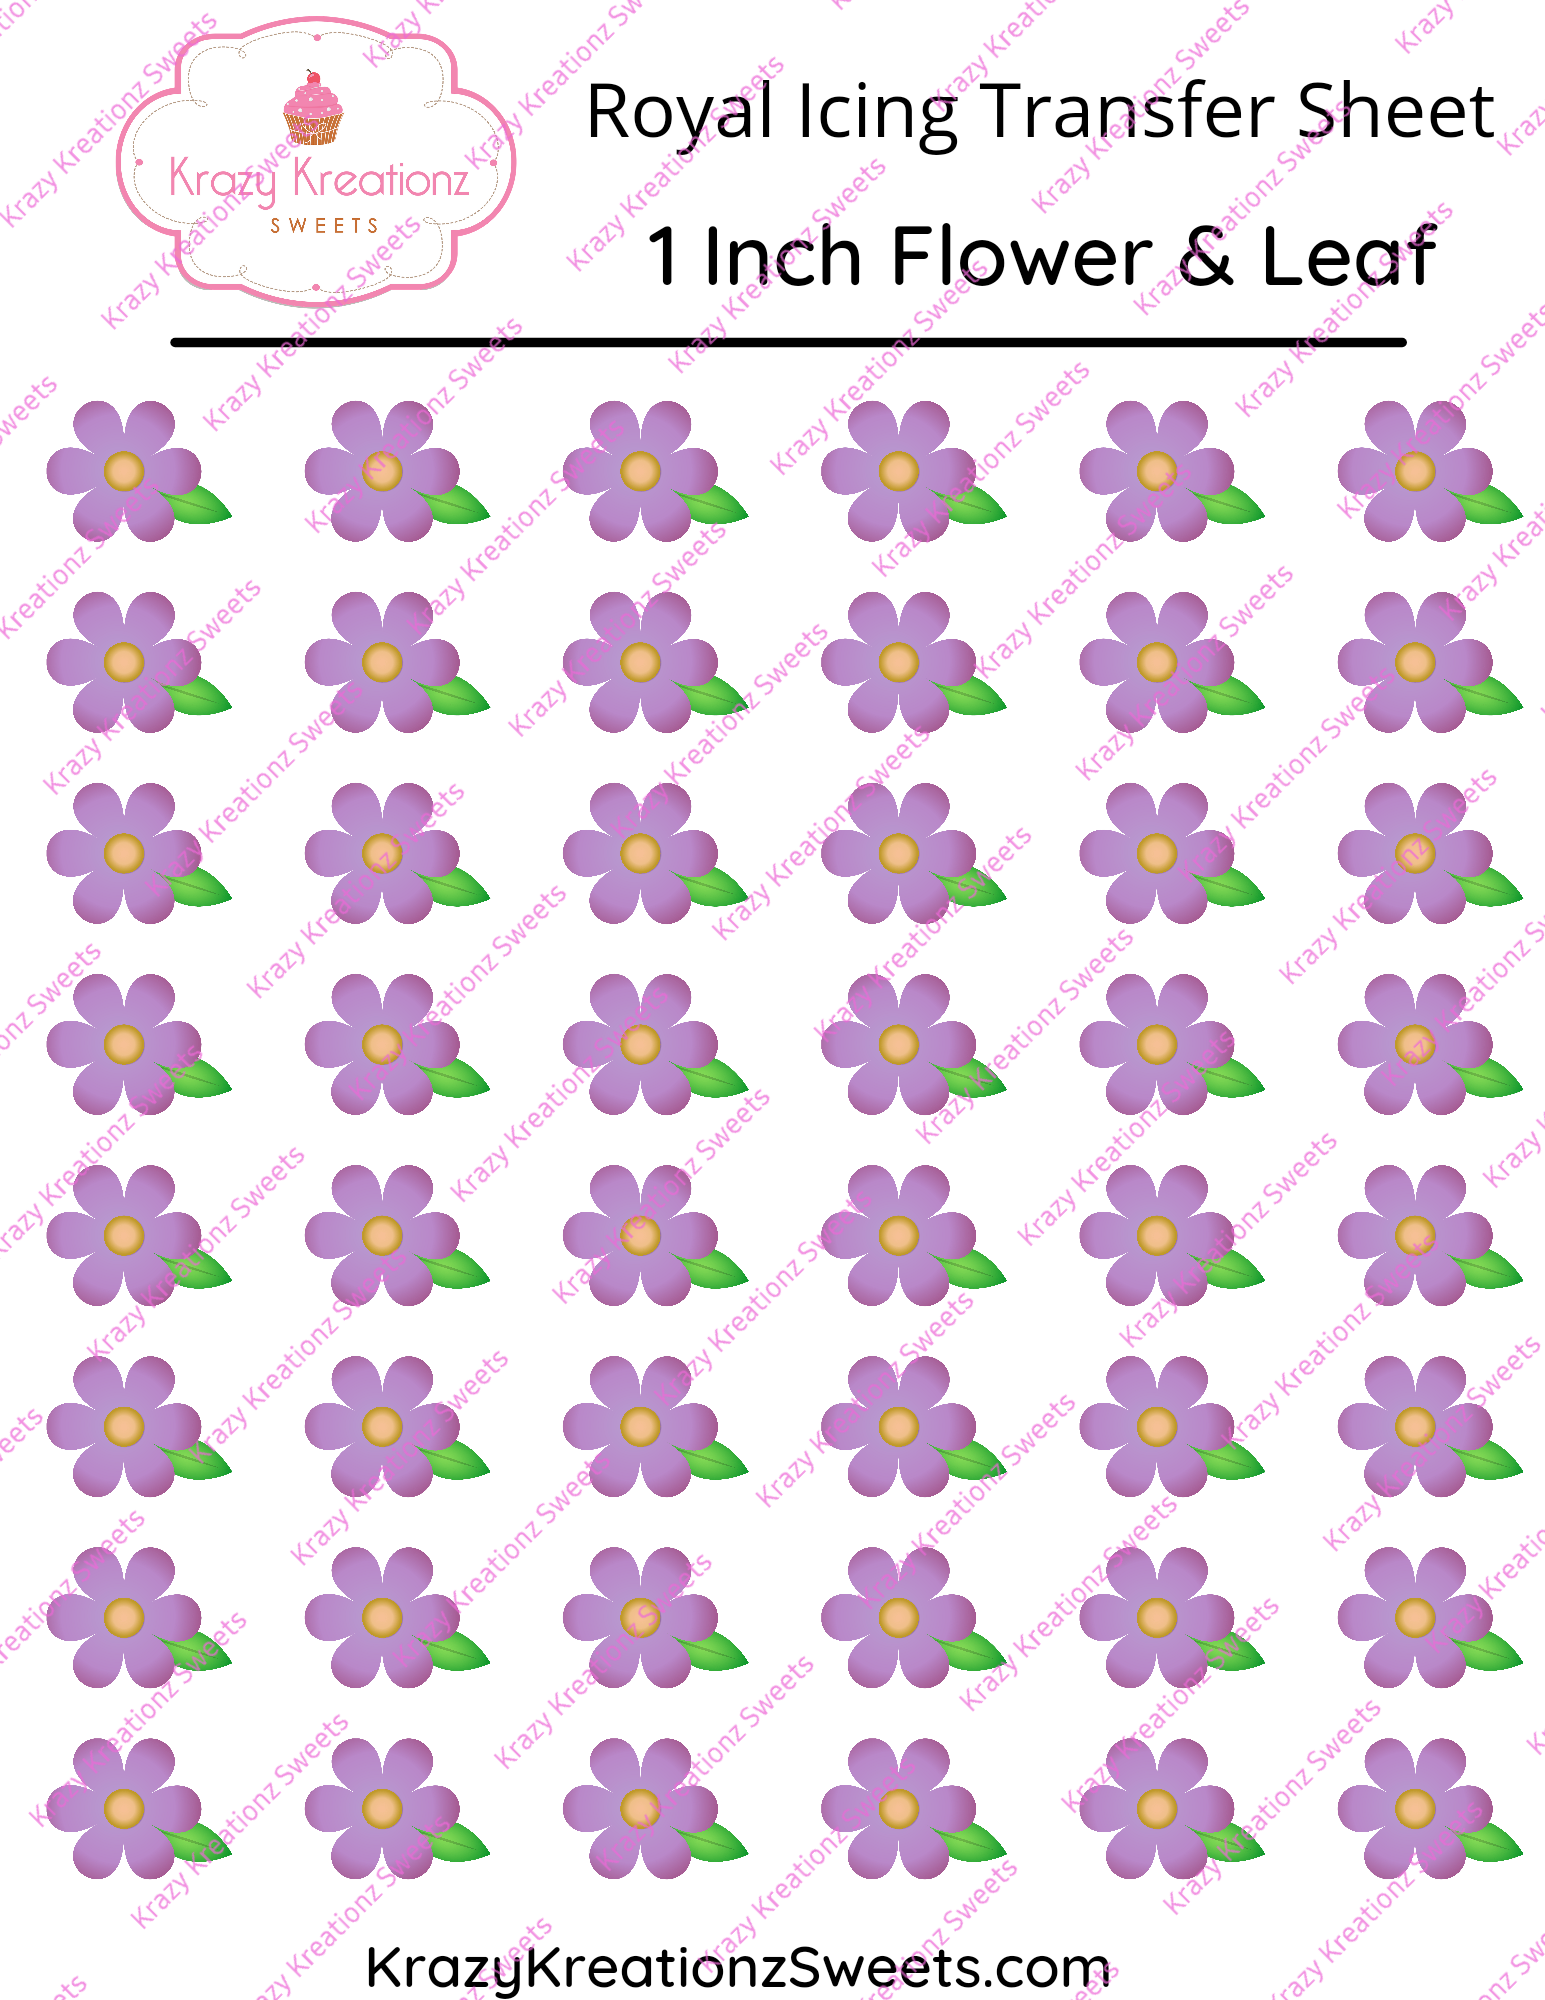 1 inch Flower & Leaf Royal Icing Transfer Sheet